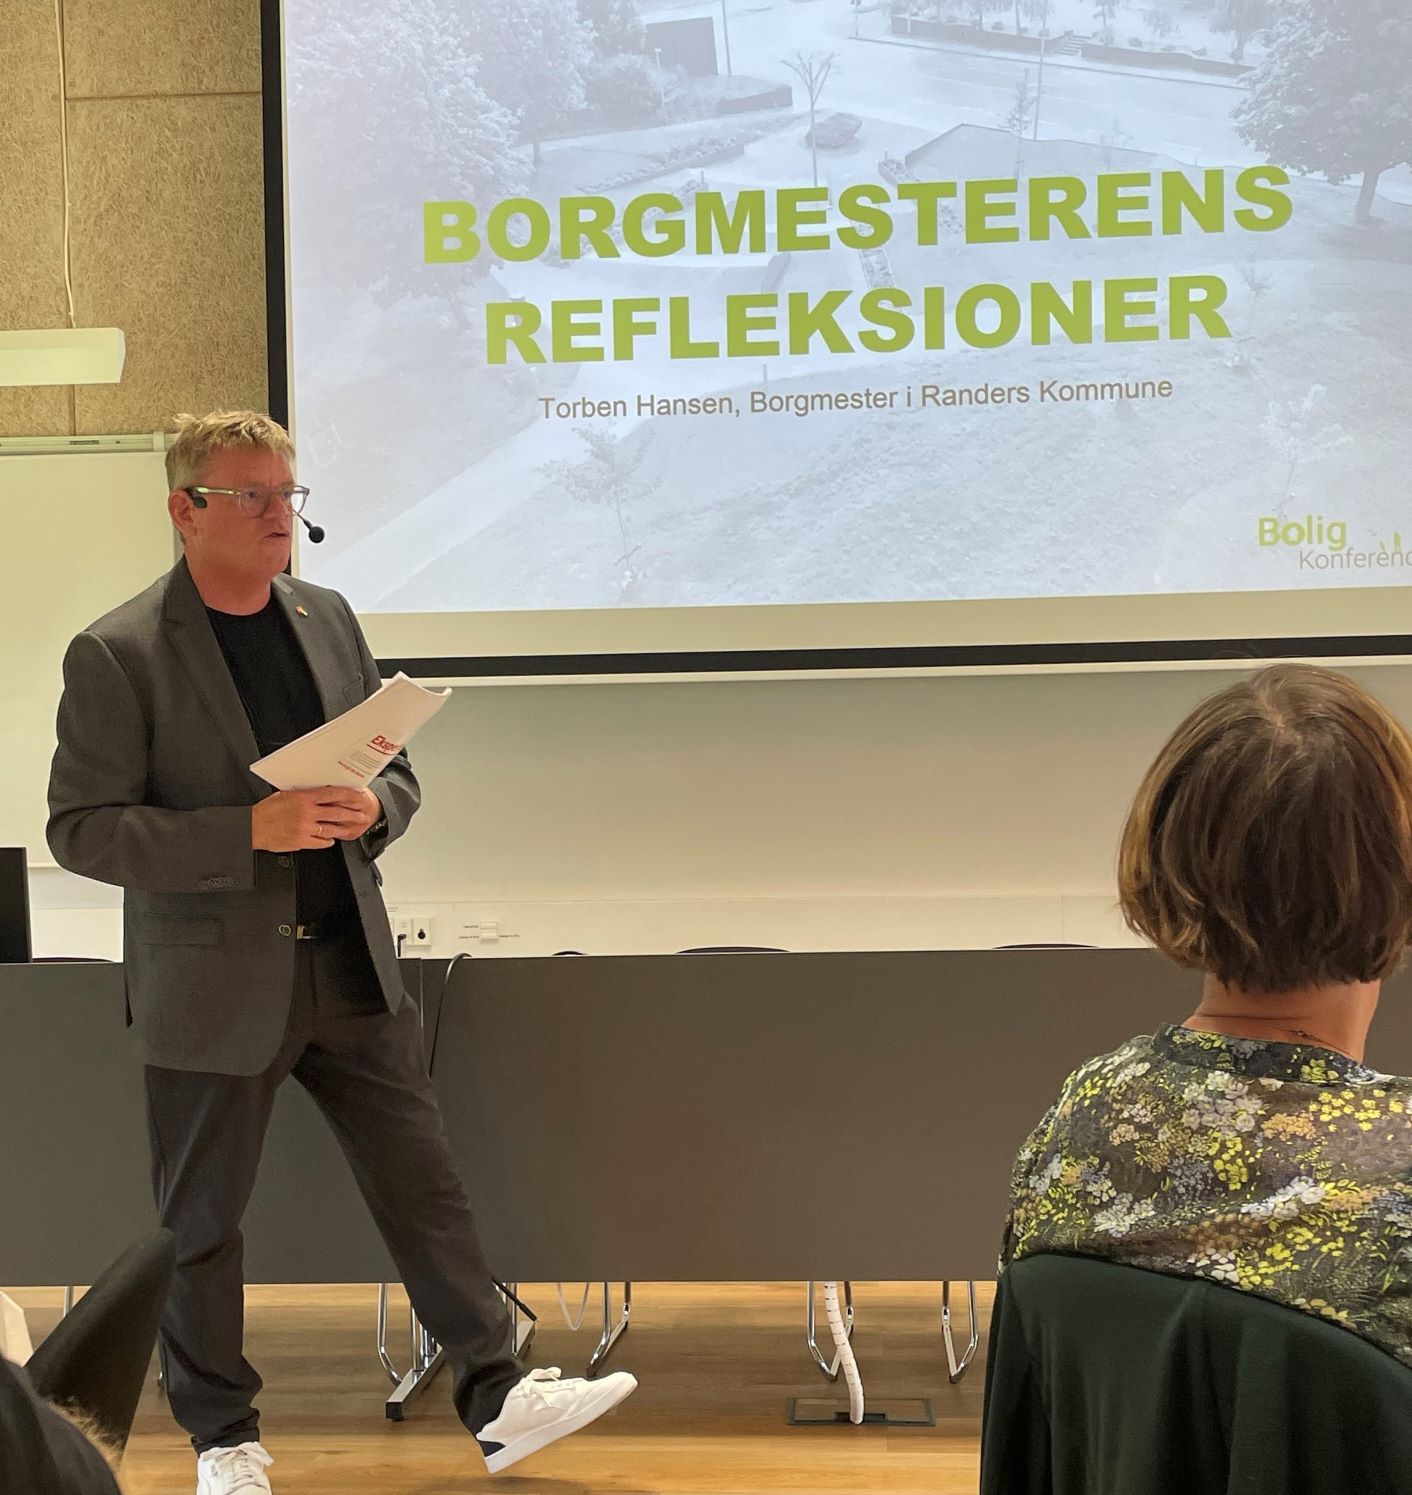 Randers Kommunes borgmester Torben Hansen var forbi og kom med sine refleksioner.